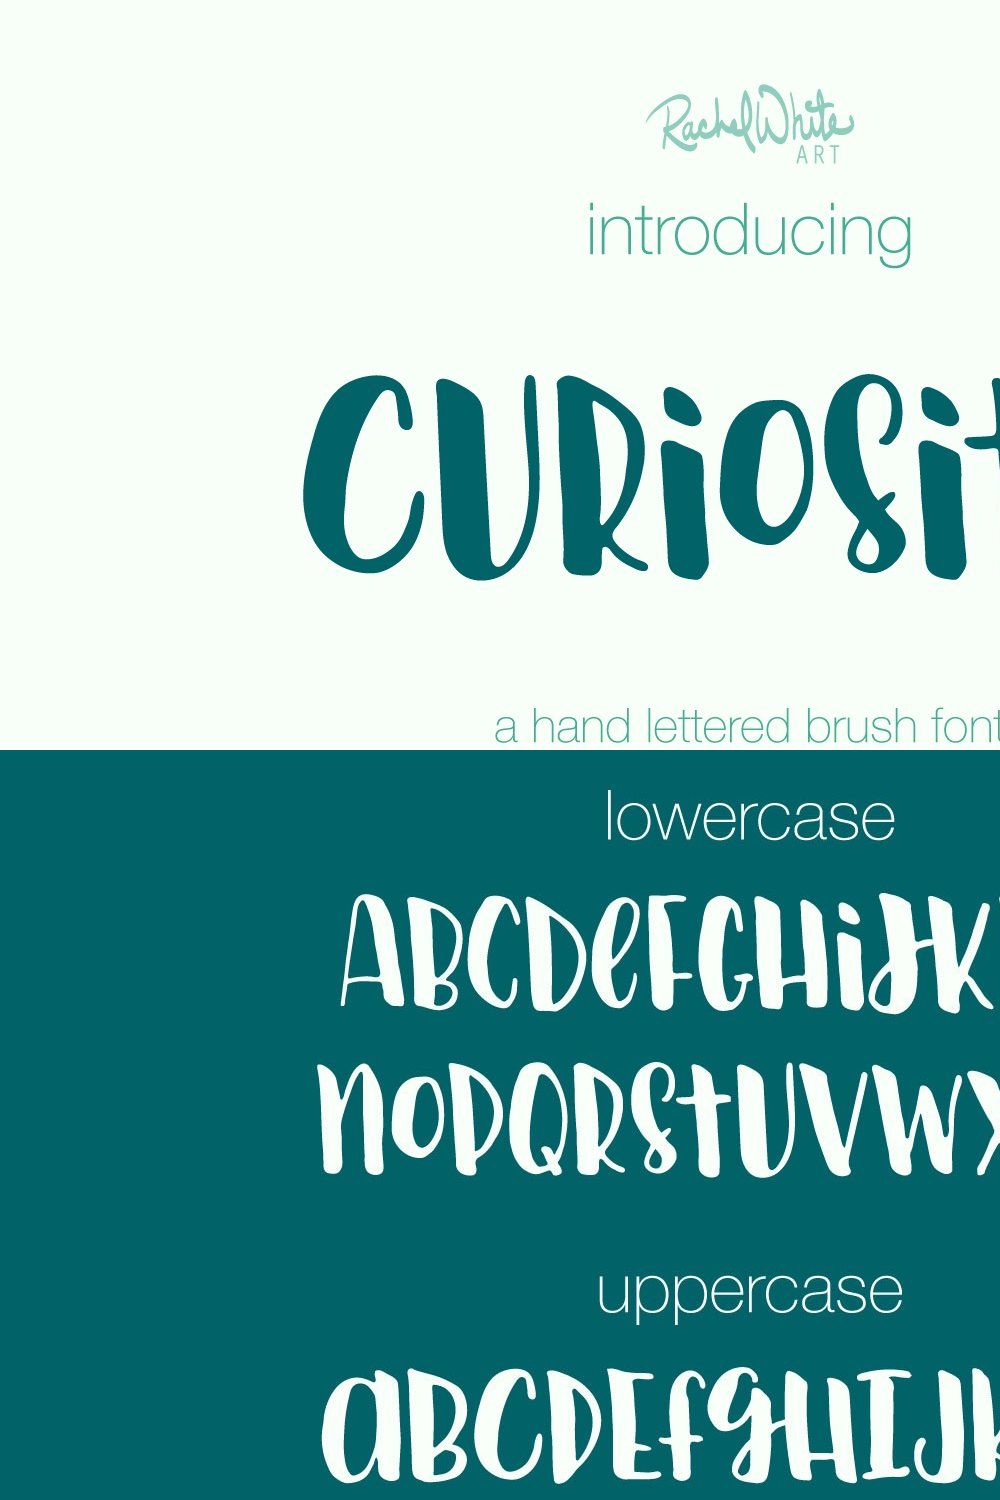 Curiosity, hand lettered brush font pinterest preview image.